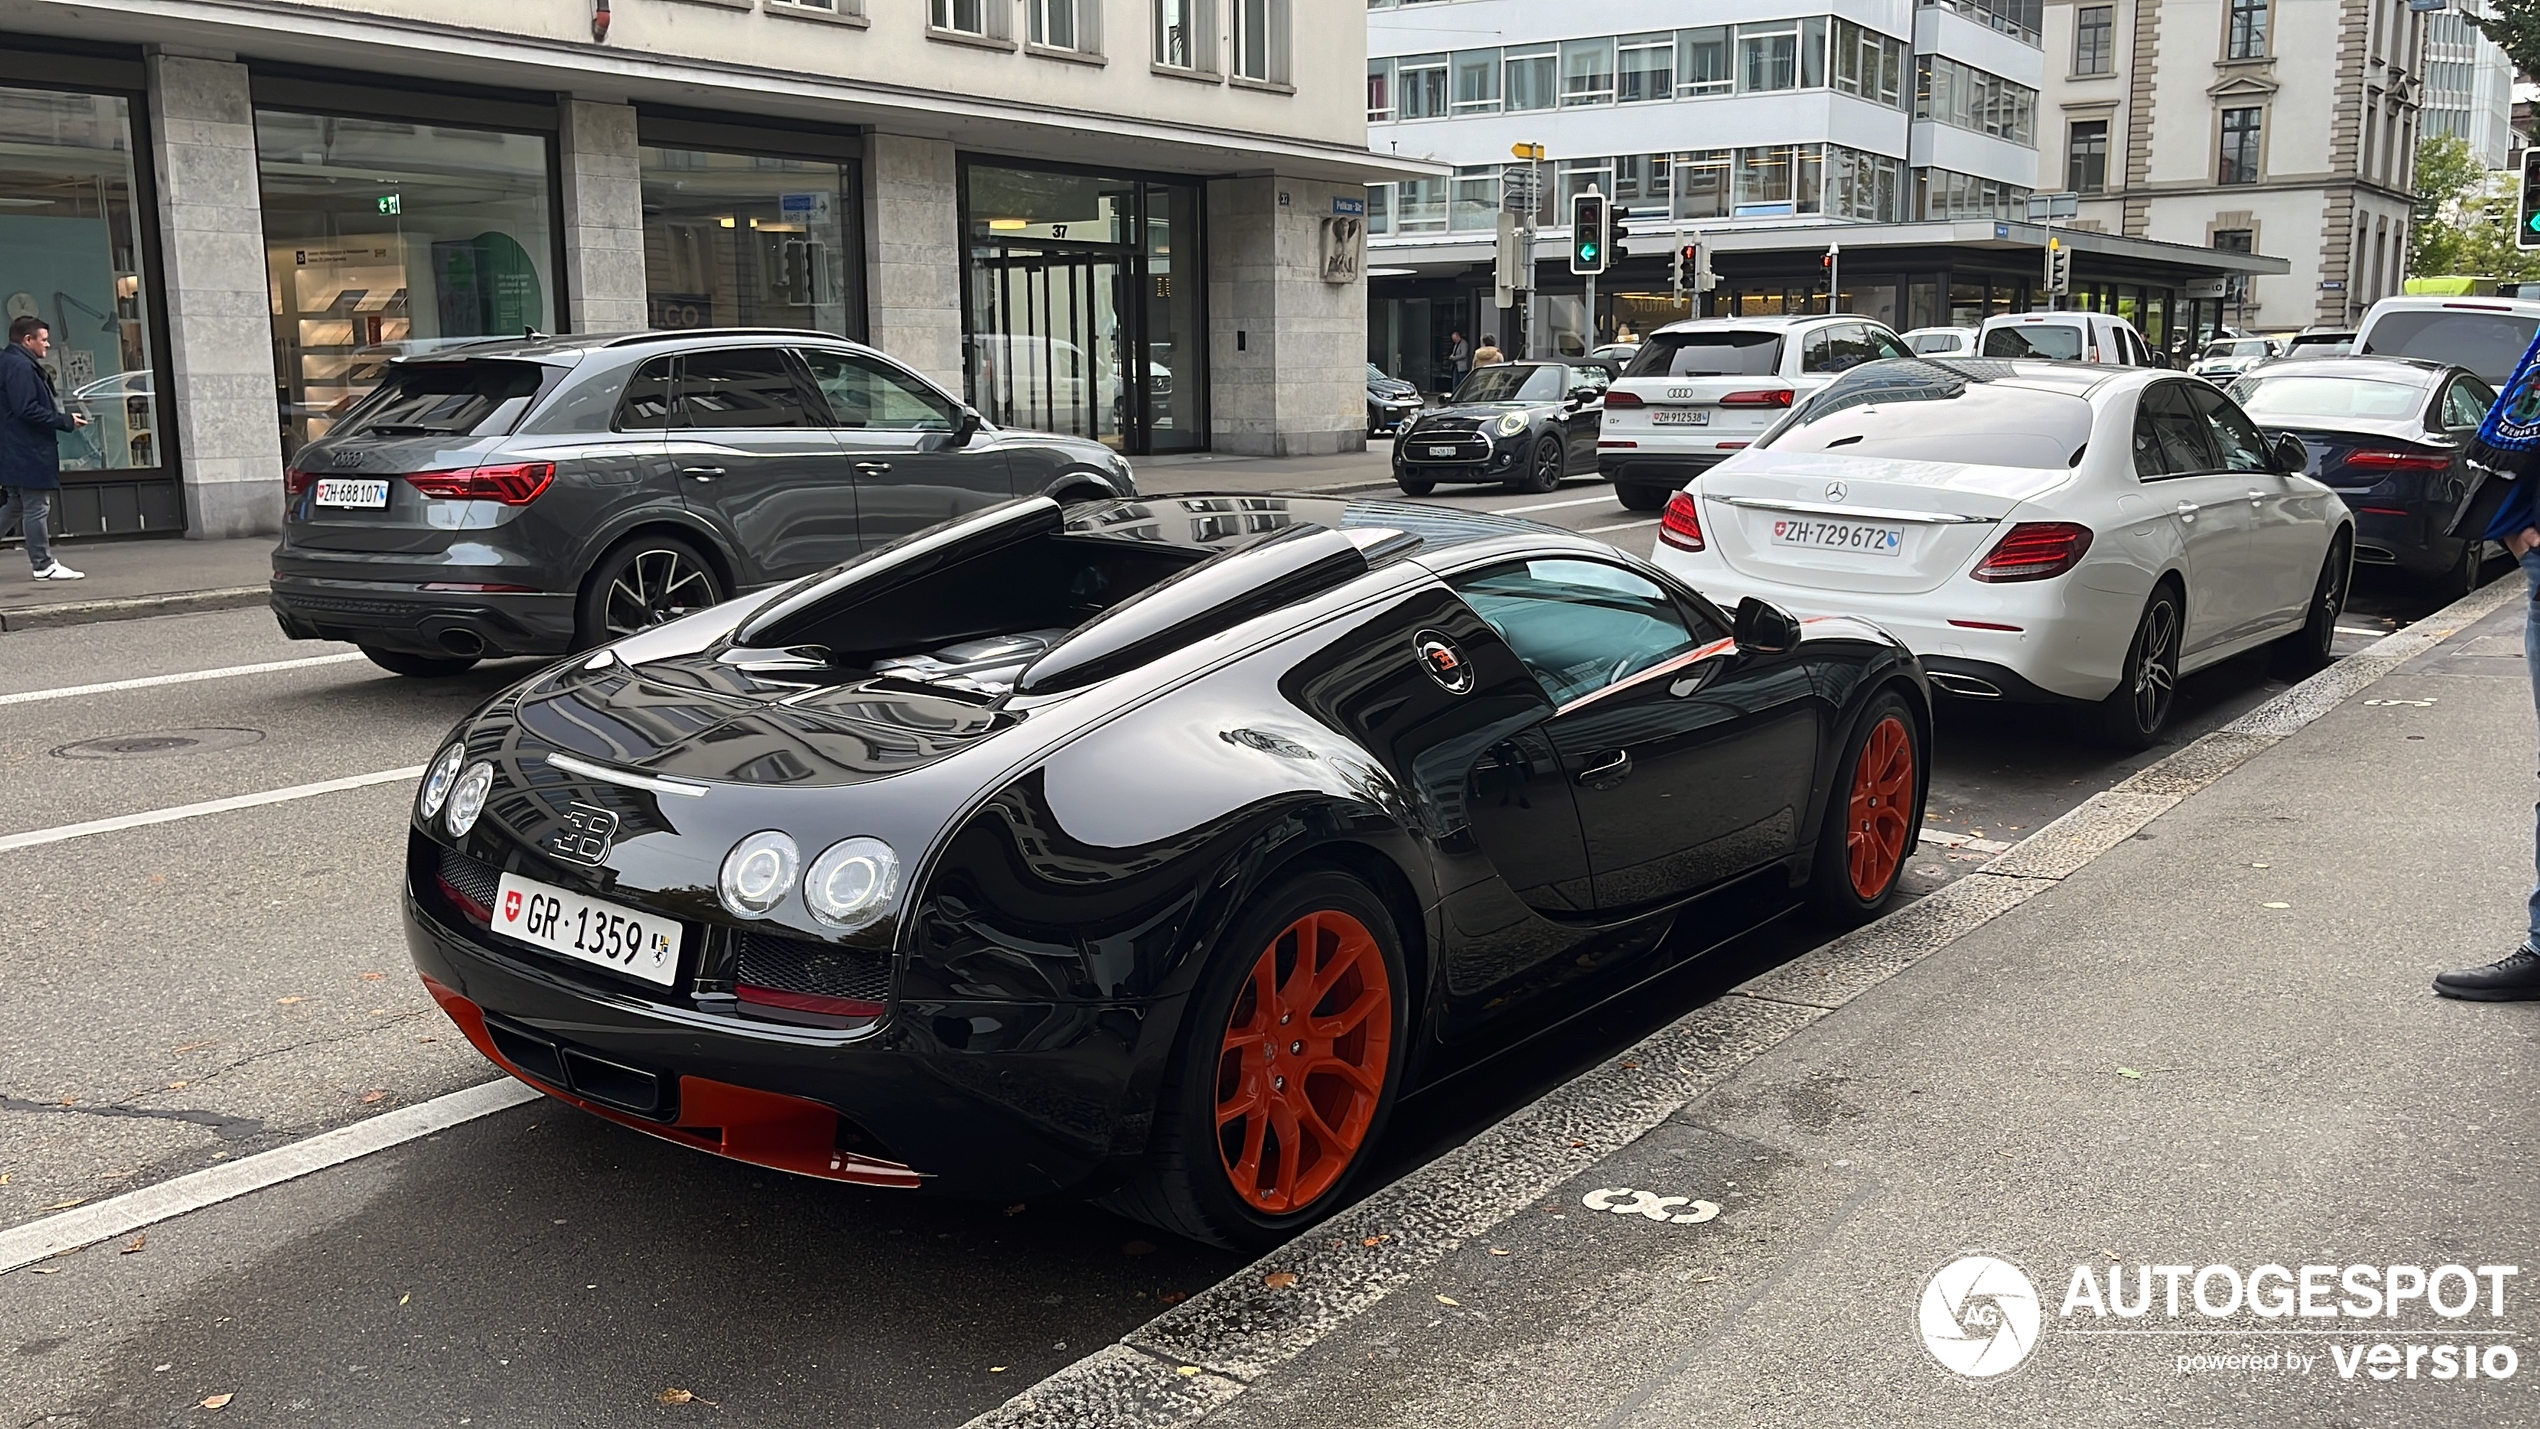 Još jedan Bugatti primećen u gradu Cirihu